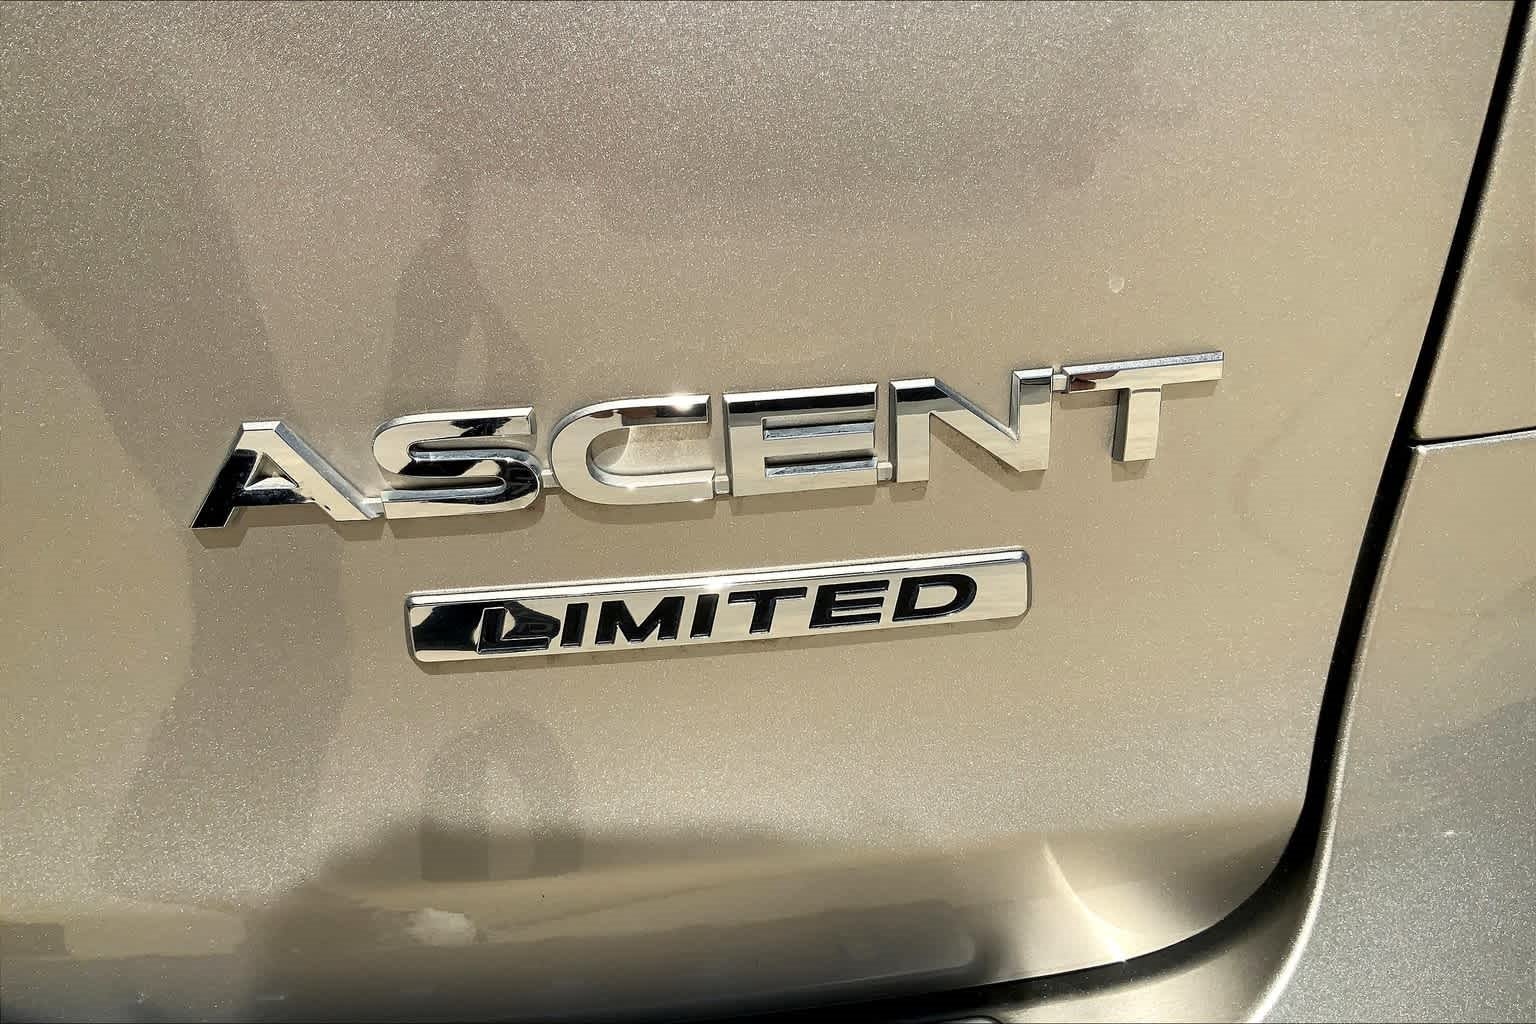 2020 Subaru Ascent Limited